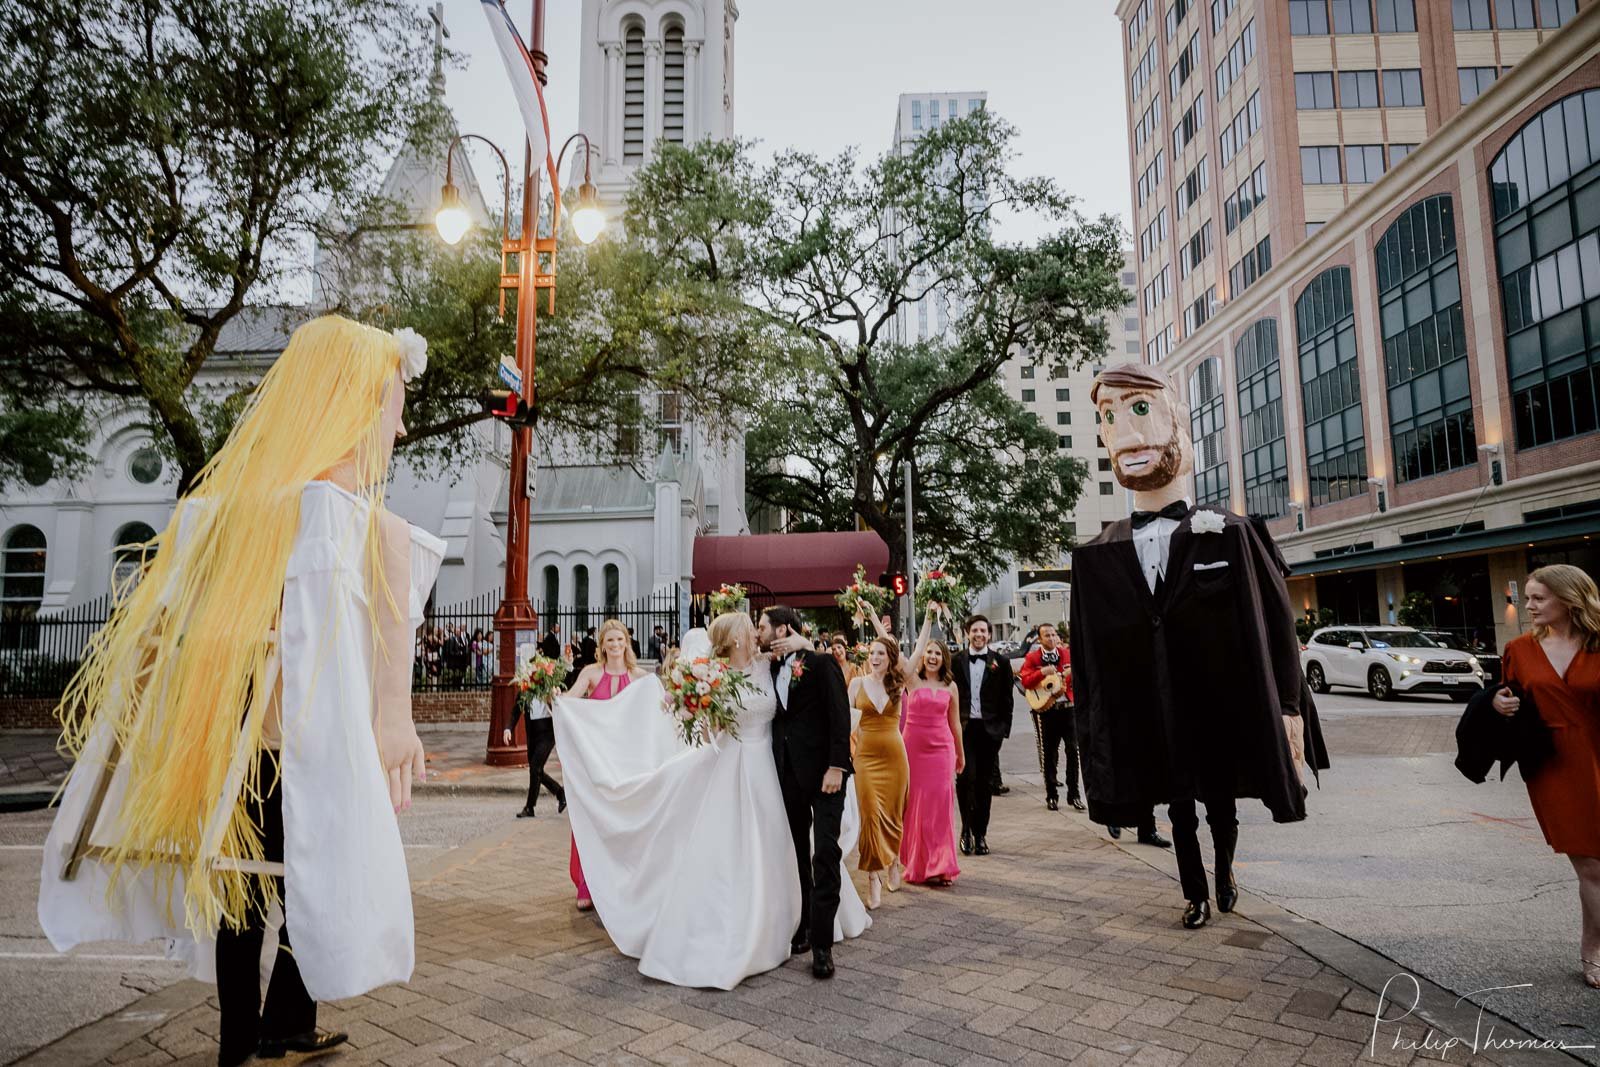 Union Station Houston Astros Wedding Reception-Philip Thomas Photography